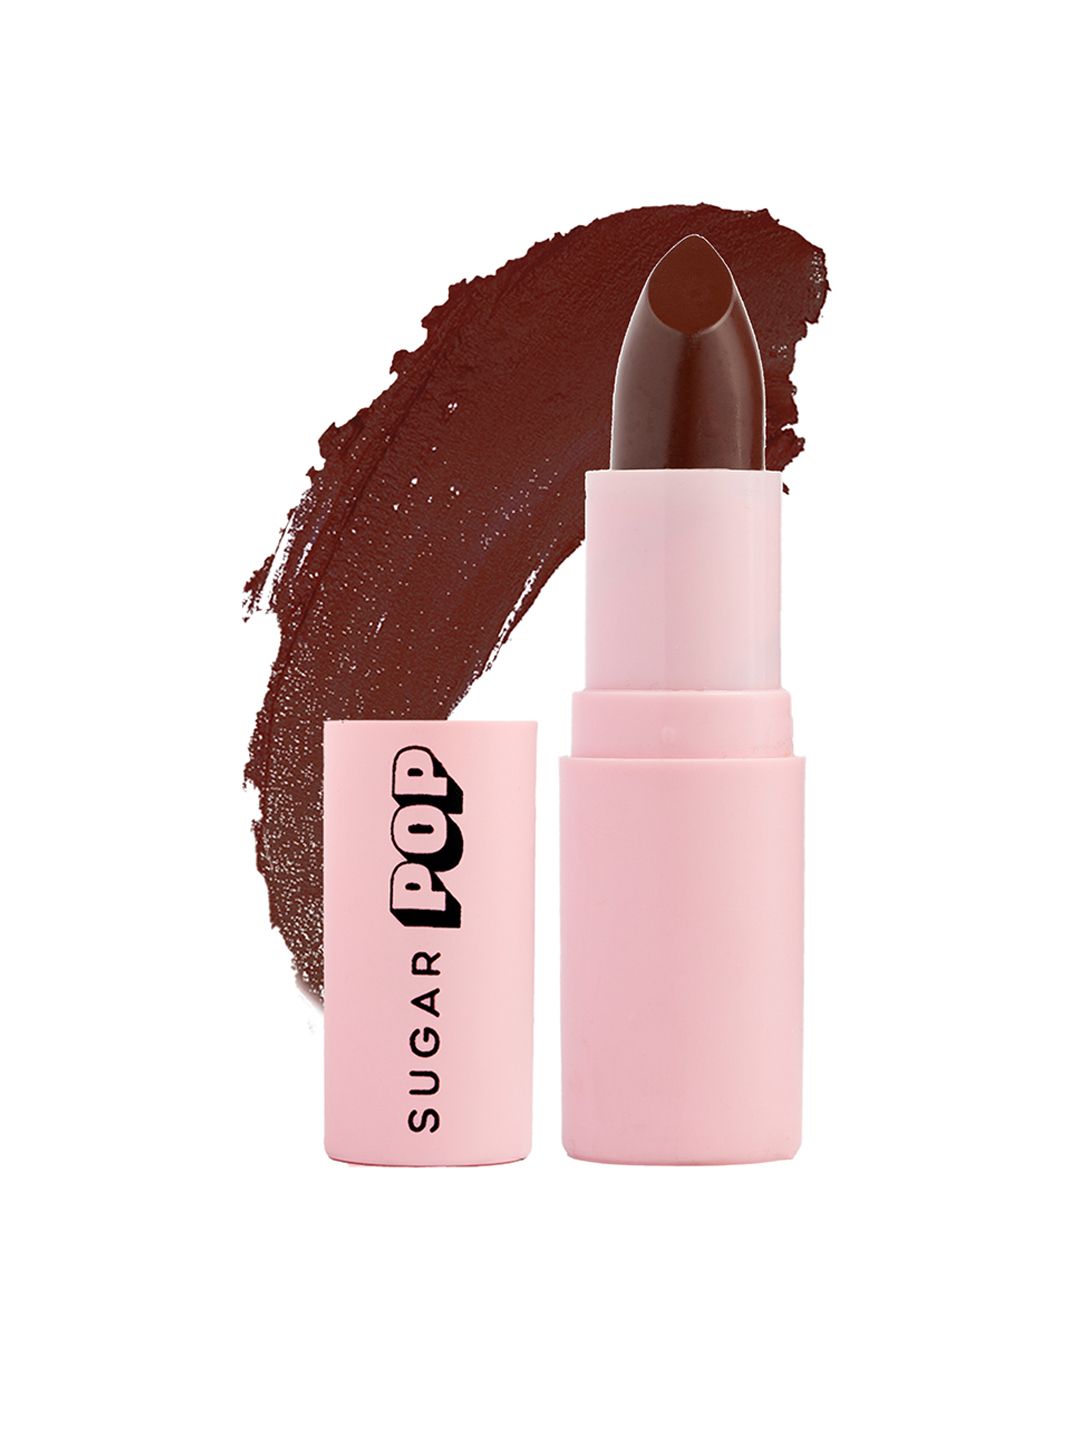 SUGAR POP Long-Lasting Lightweight Matte Lipstick 4.2g - Chocolate 05 Price in India